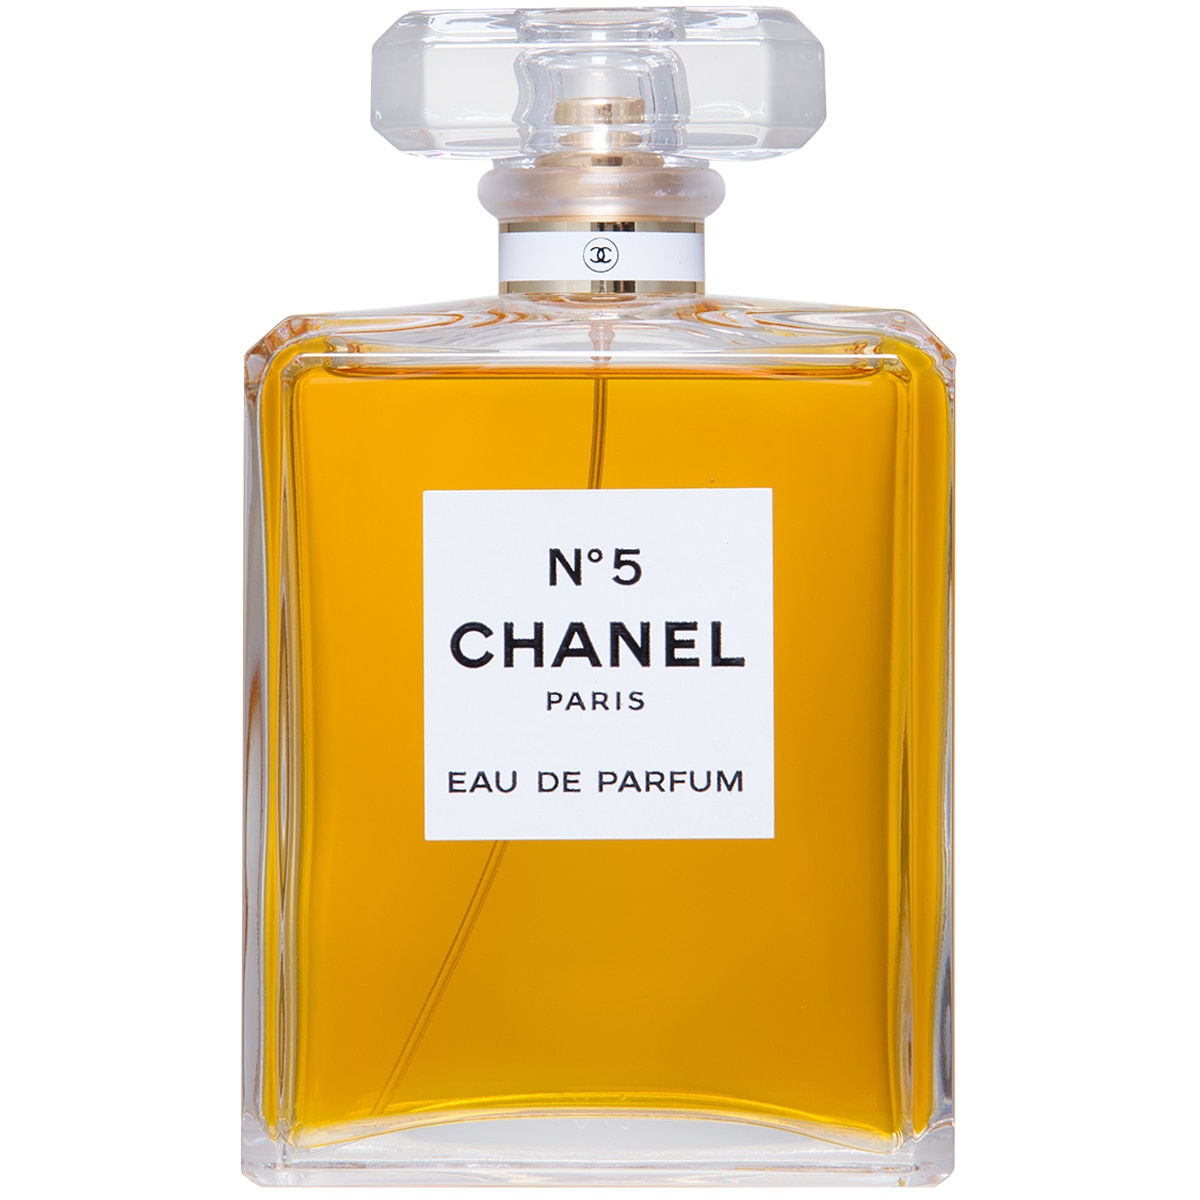 Chanel No. 5 Eau de Parfum 200ml | Costco Australia